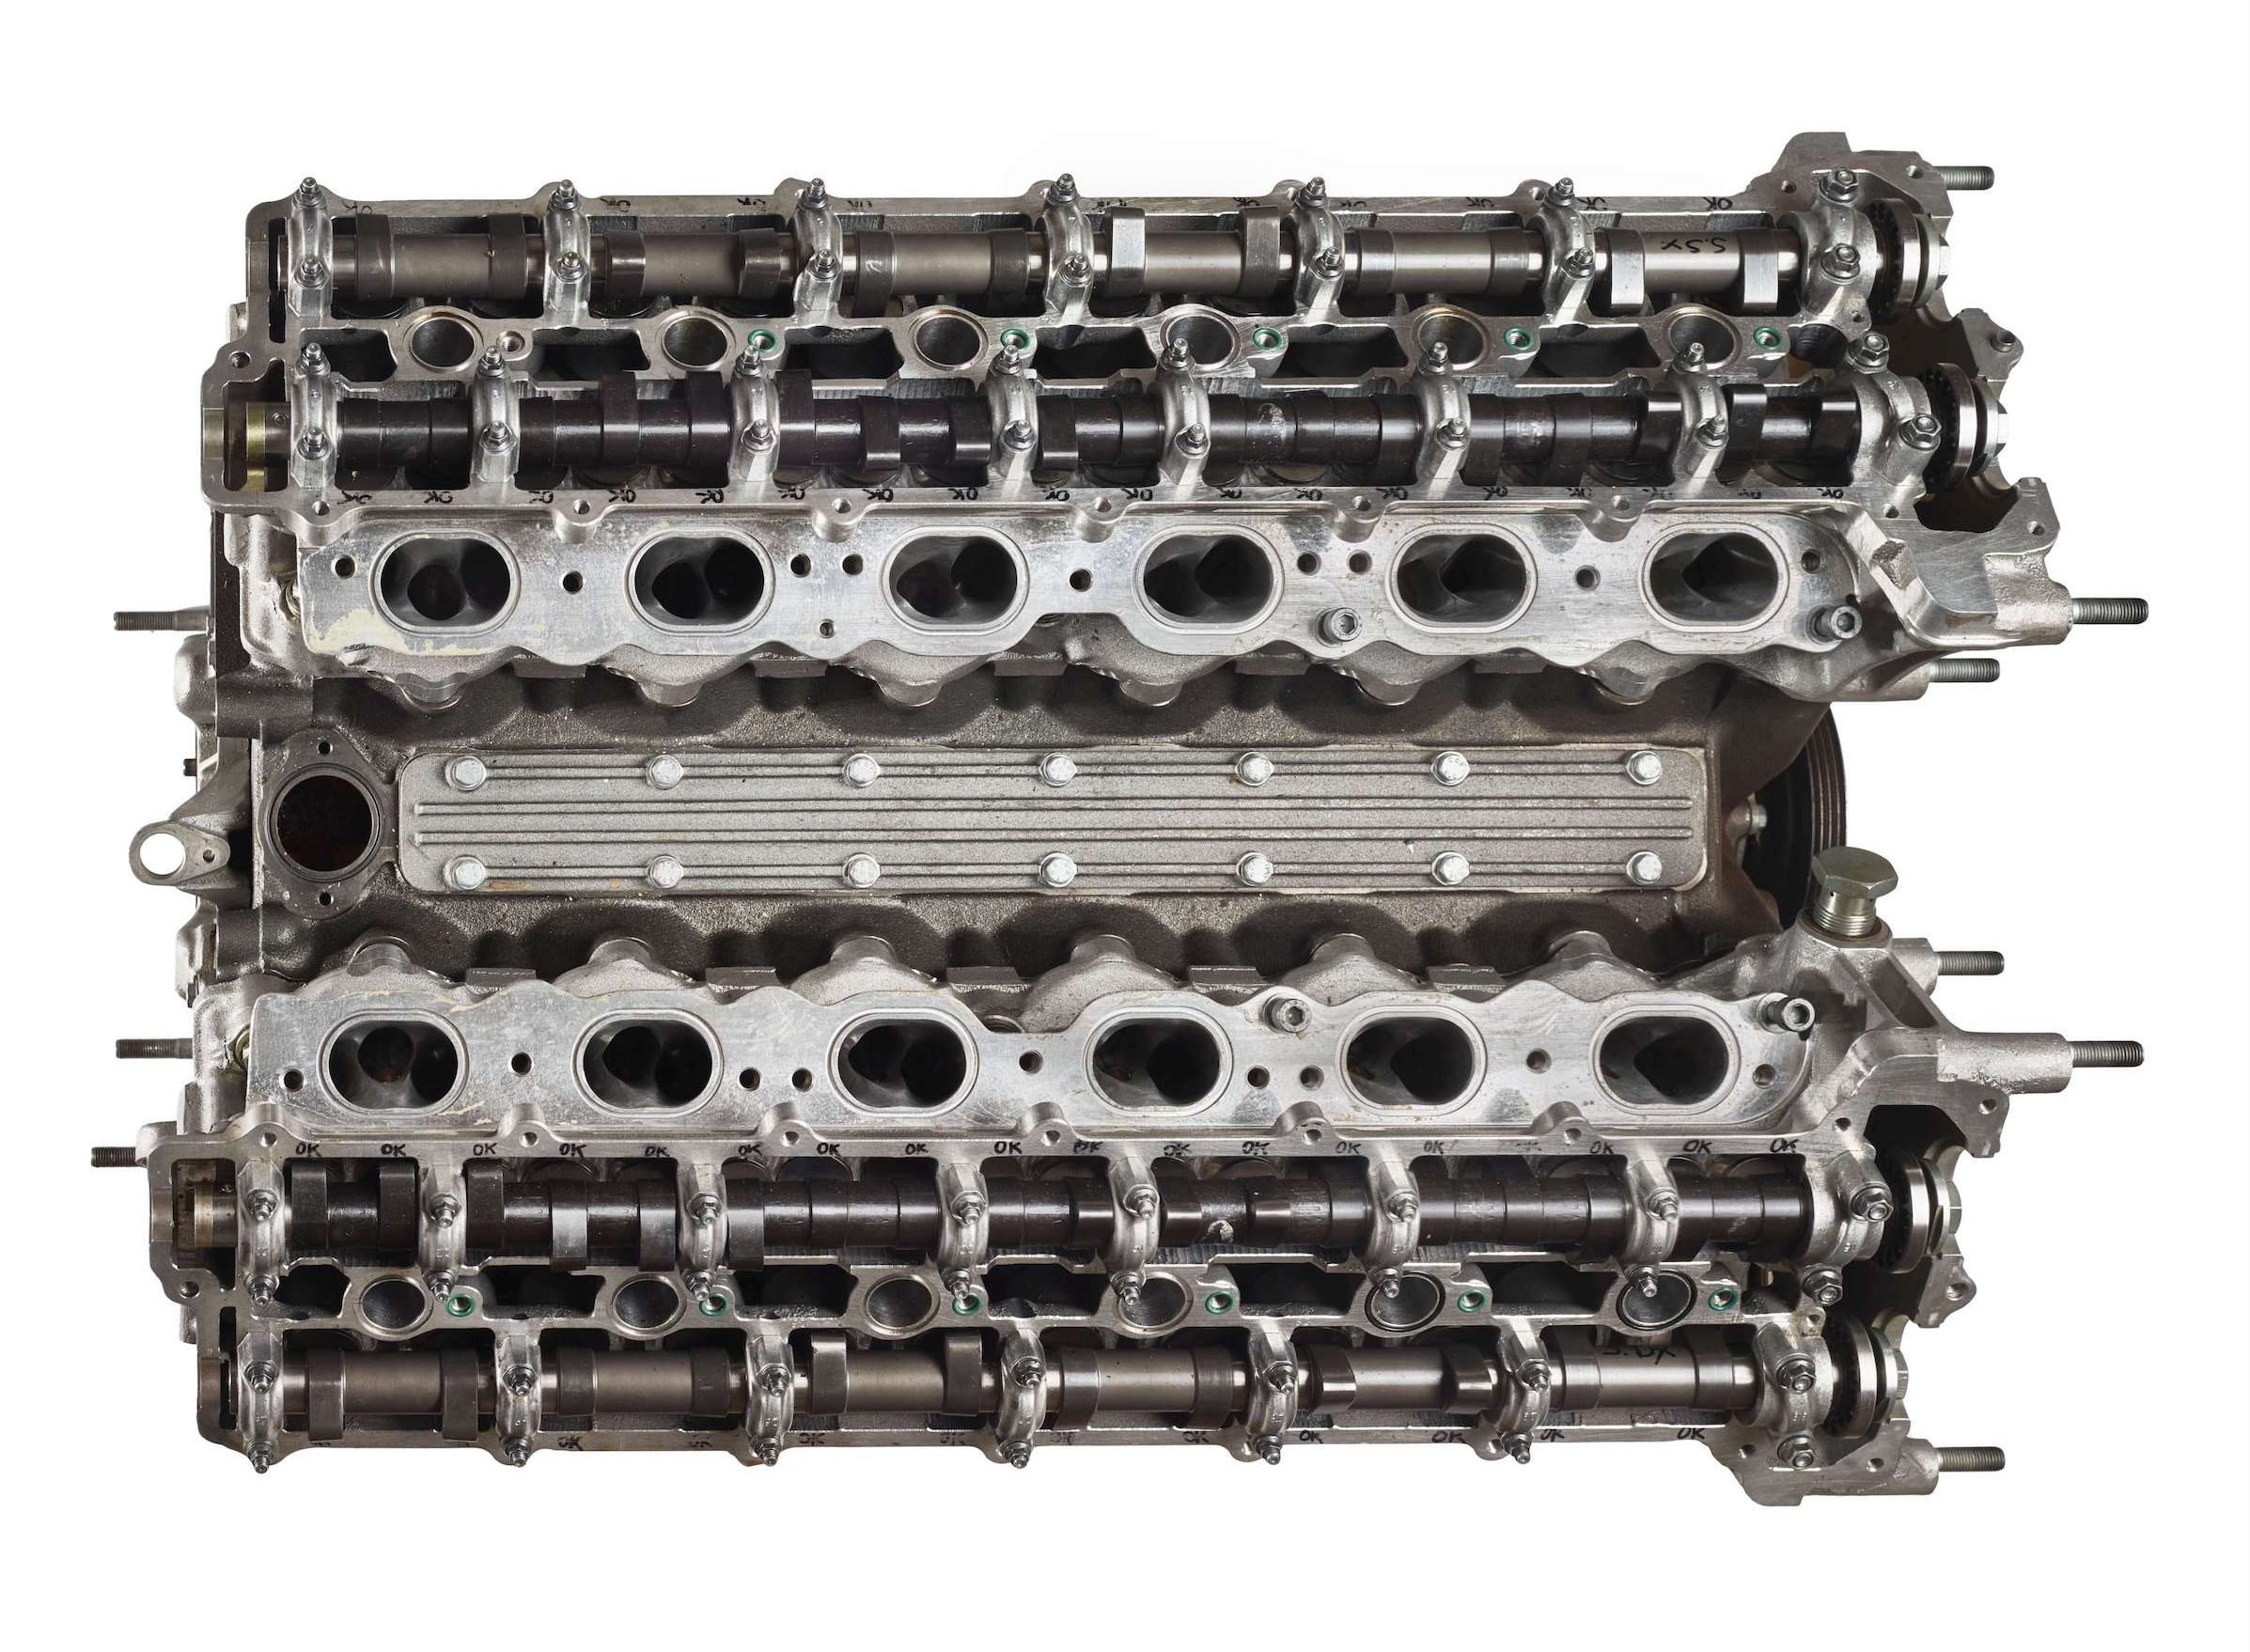 Crate Engine Royalty: A 740 HP Ferrari F50 GT V12 Engine.